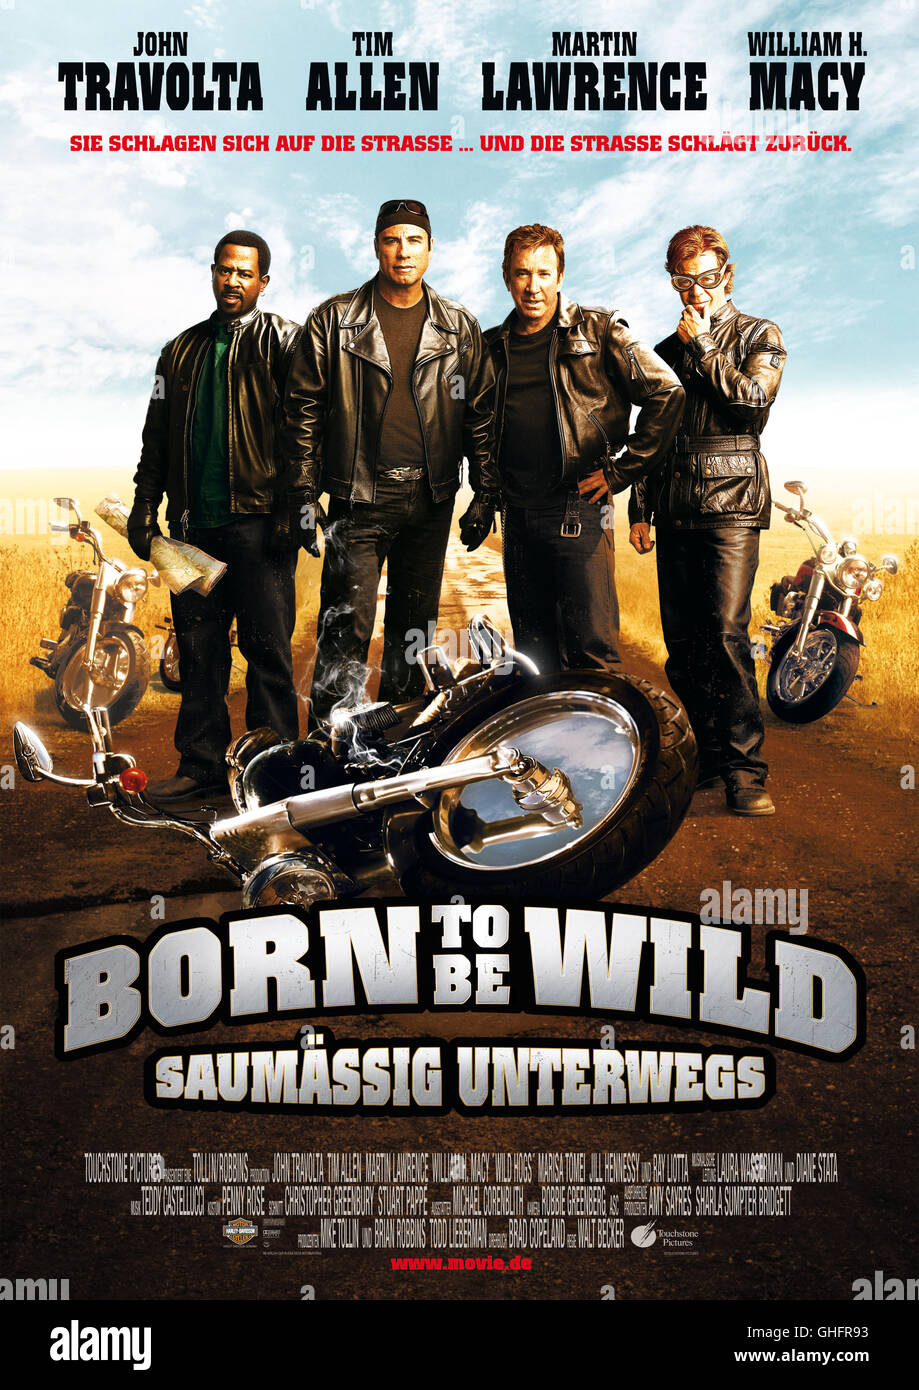 Born to be wild - Saumäßig unterwegs / Filmplakat Regie: Walt Becker aka. Wild Hogs Stock Photo